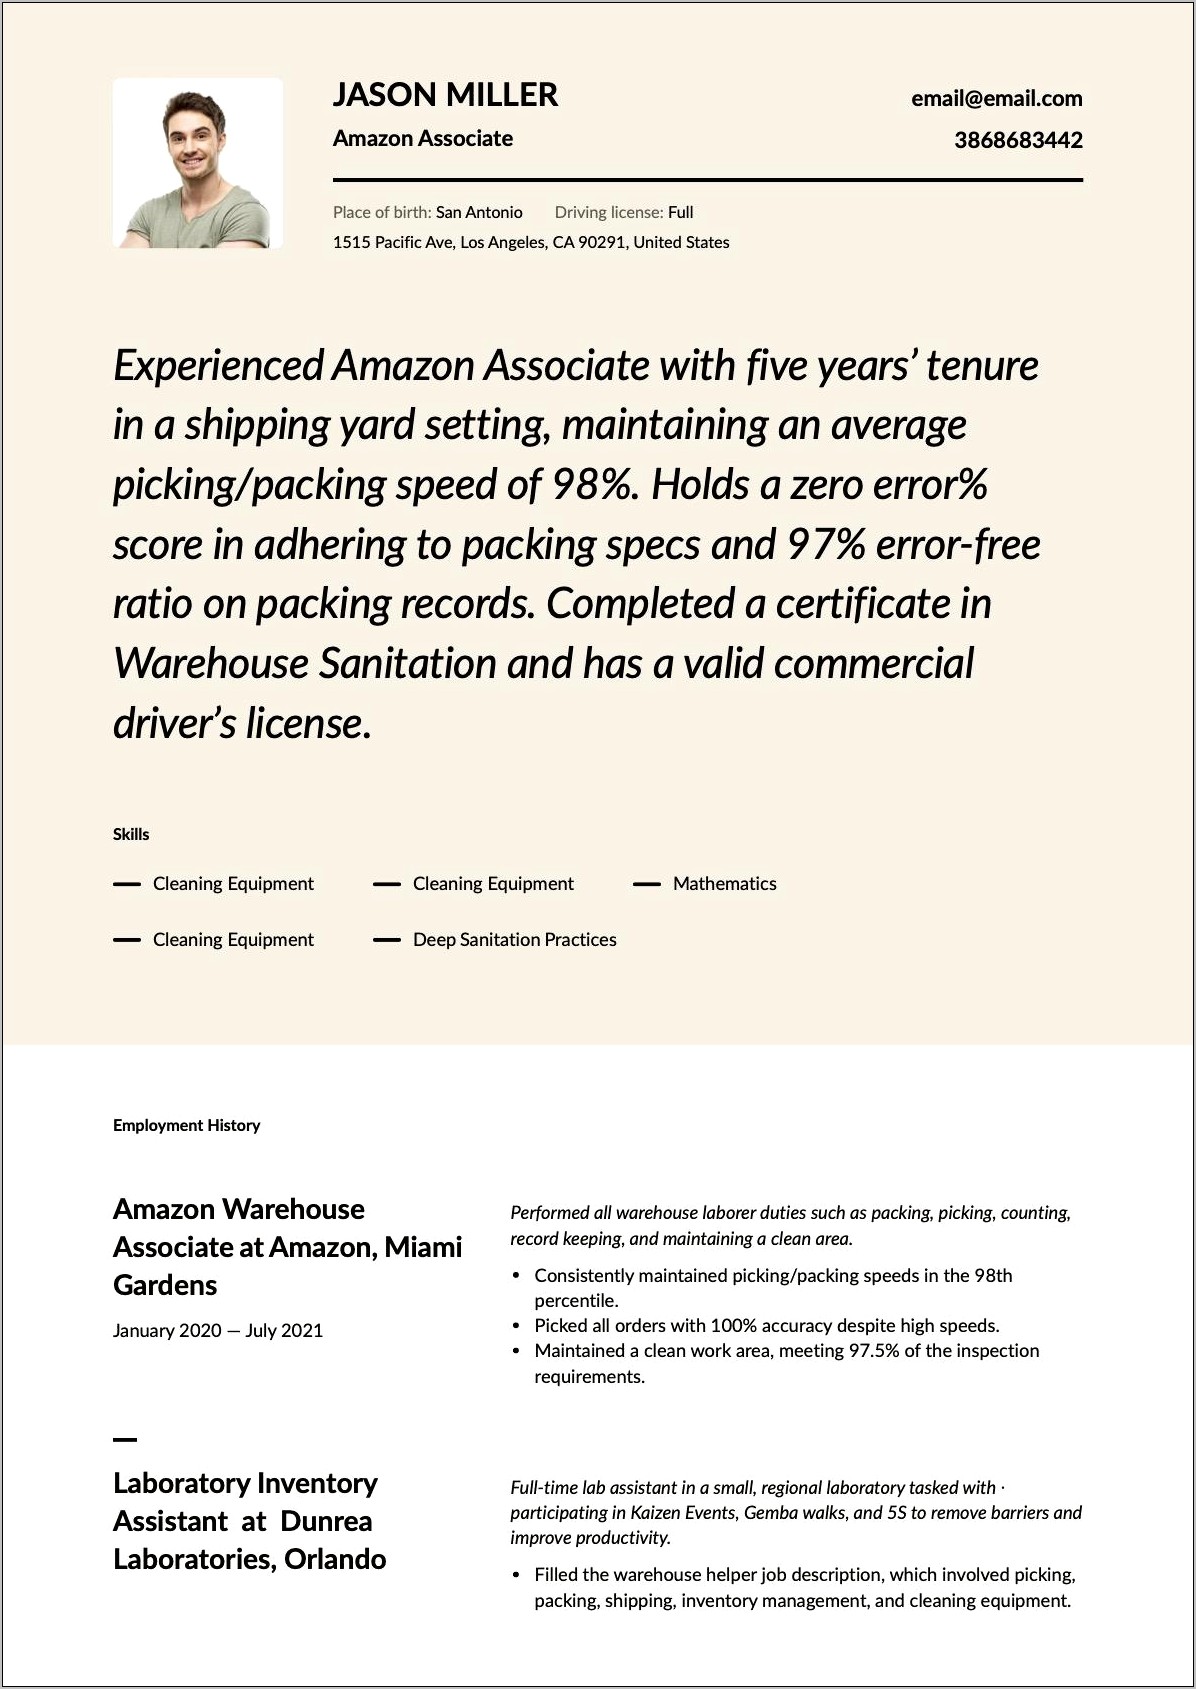 Resume Examples For Amazon Employees